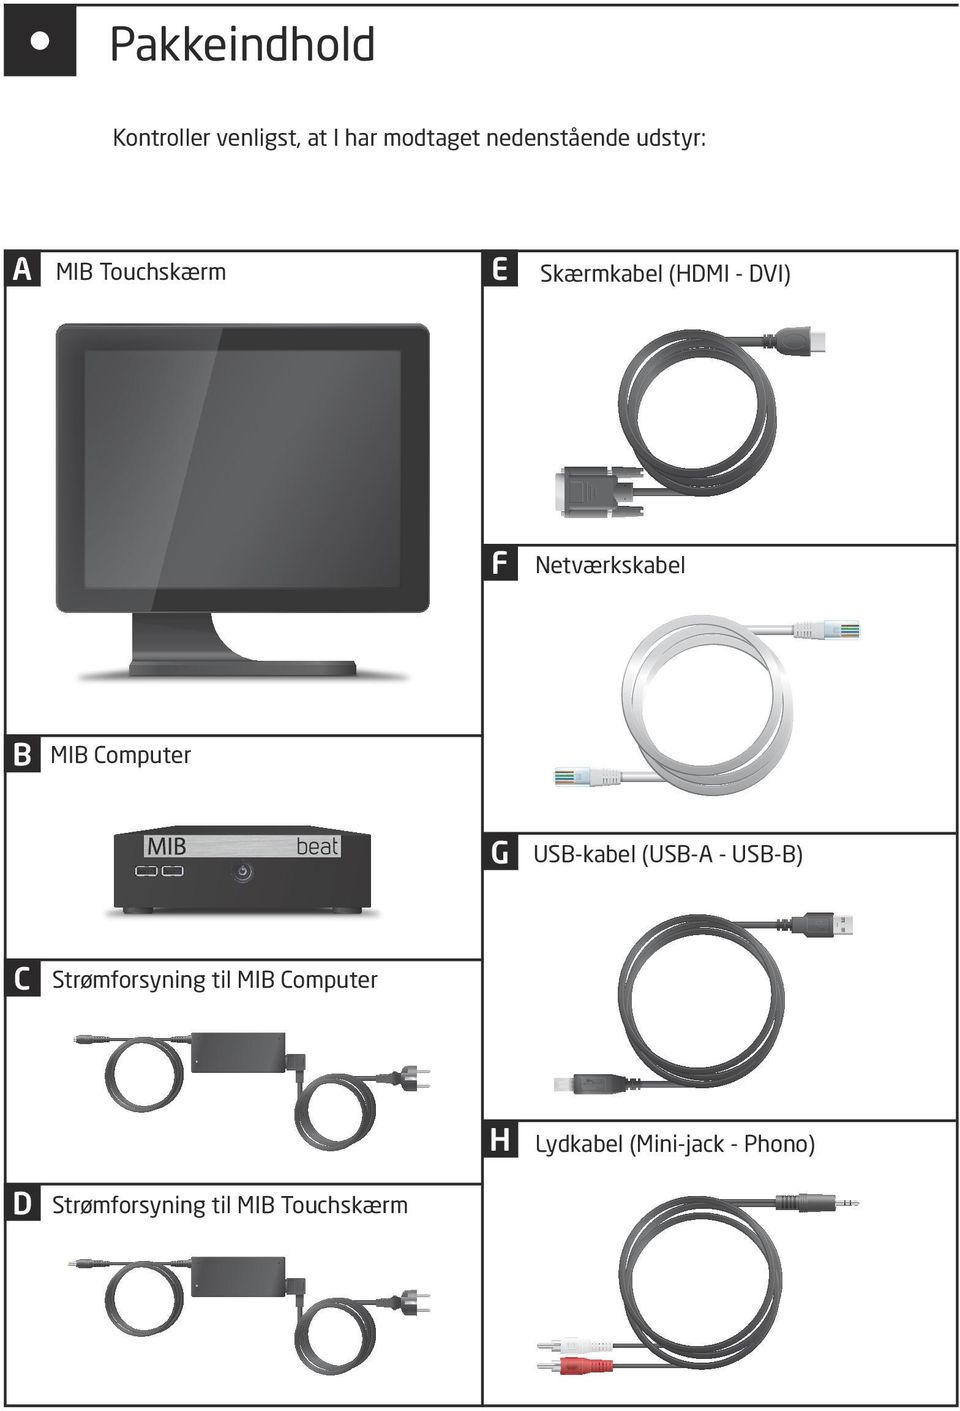 MIB Computer G USB-kabel (USB-A - USB-B) C Strømforsyning til MIB